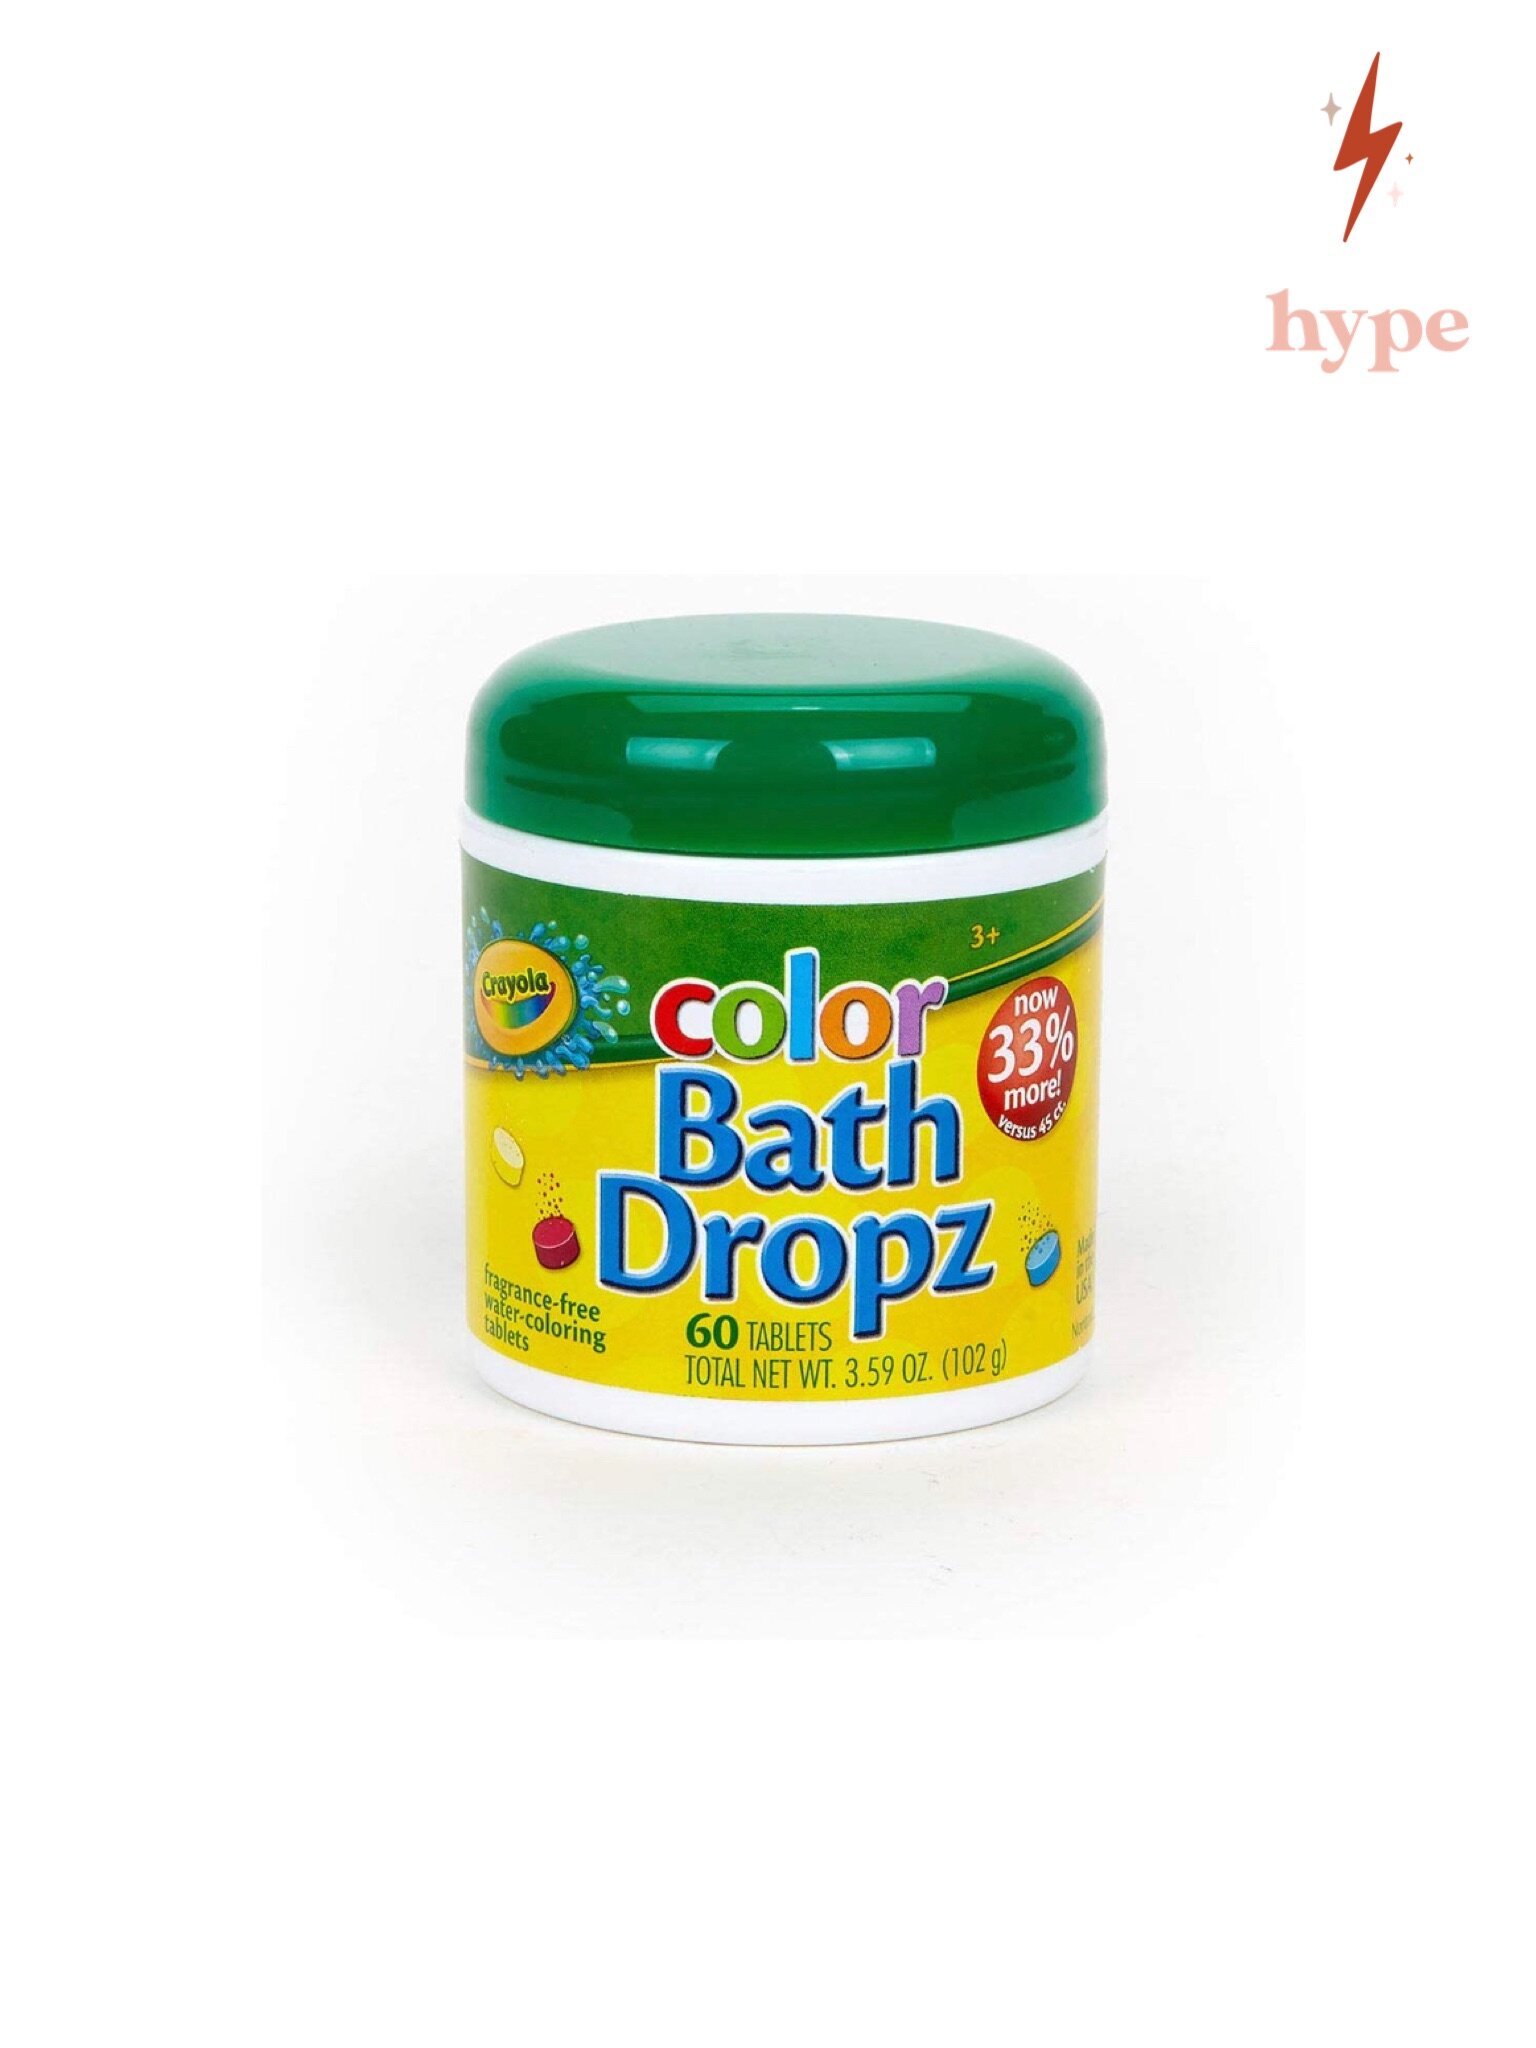 These Crayola colour 'bath dropz' help make bath time fun for kids